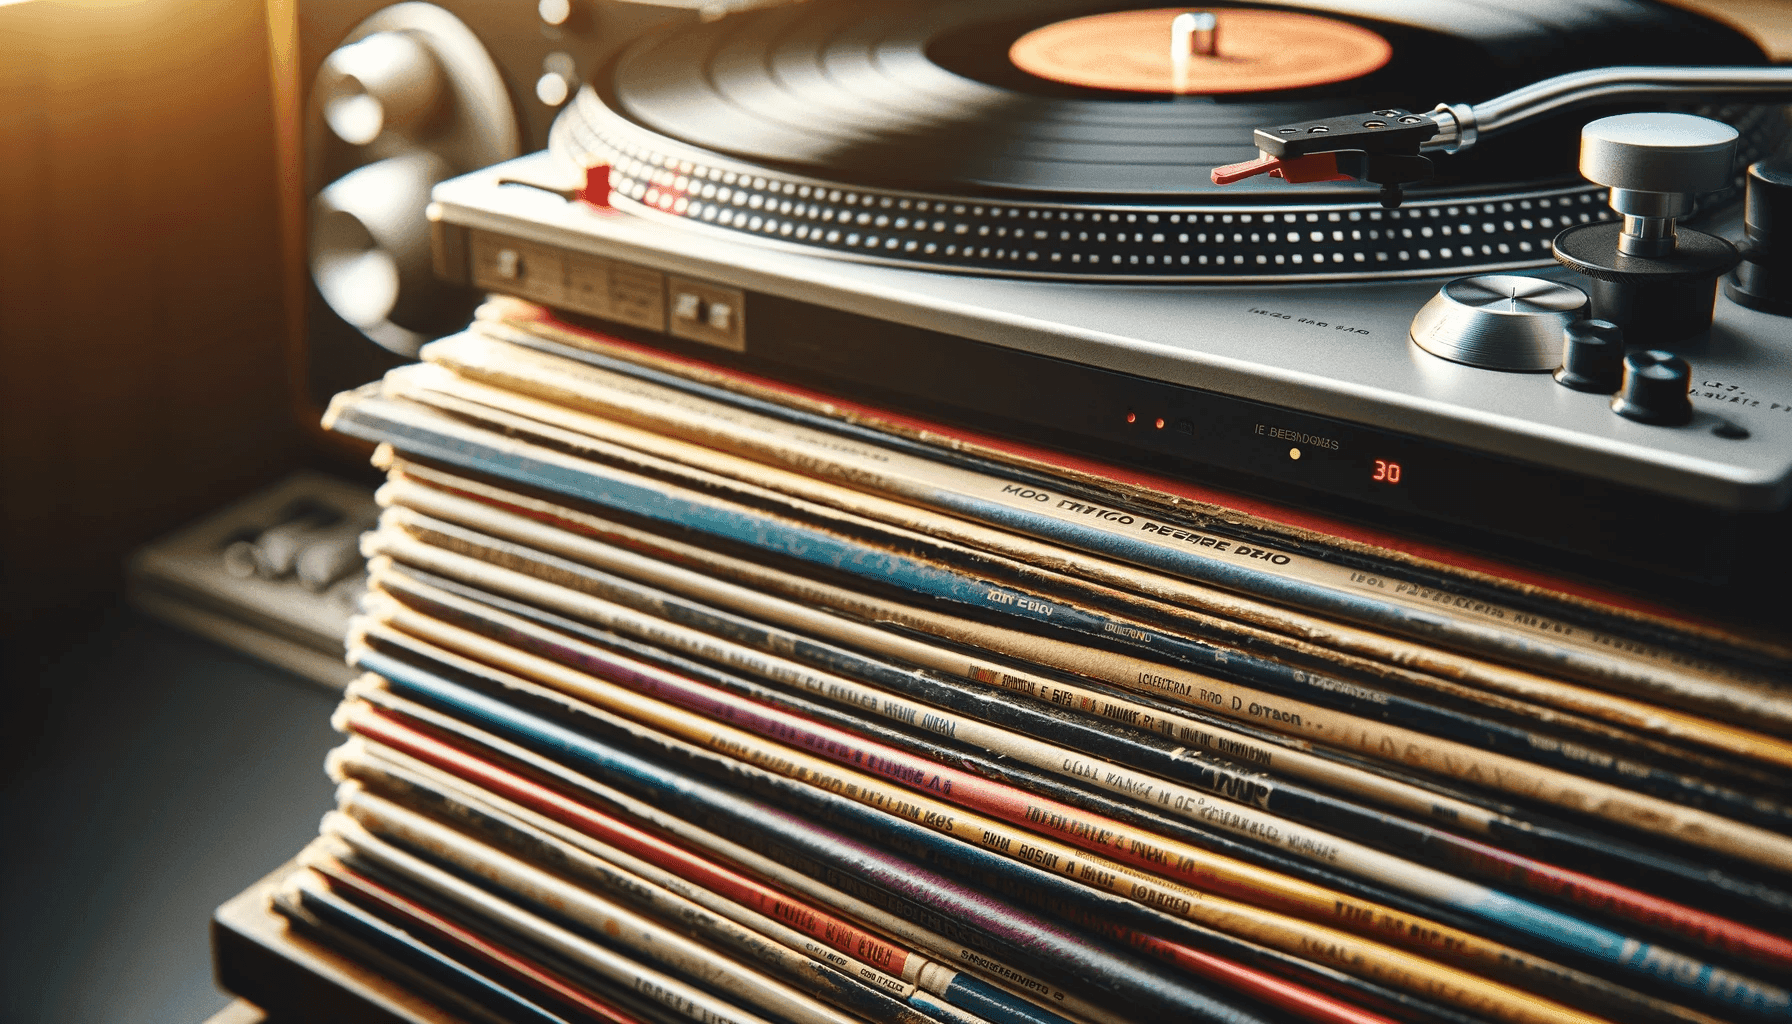 Analog Meets Digital: The Vinyl and AV System Union